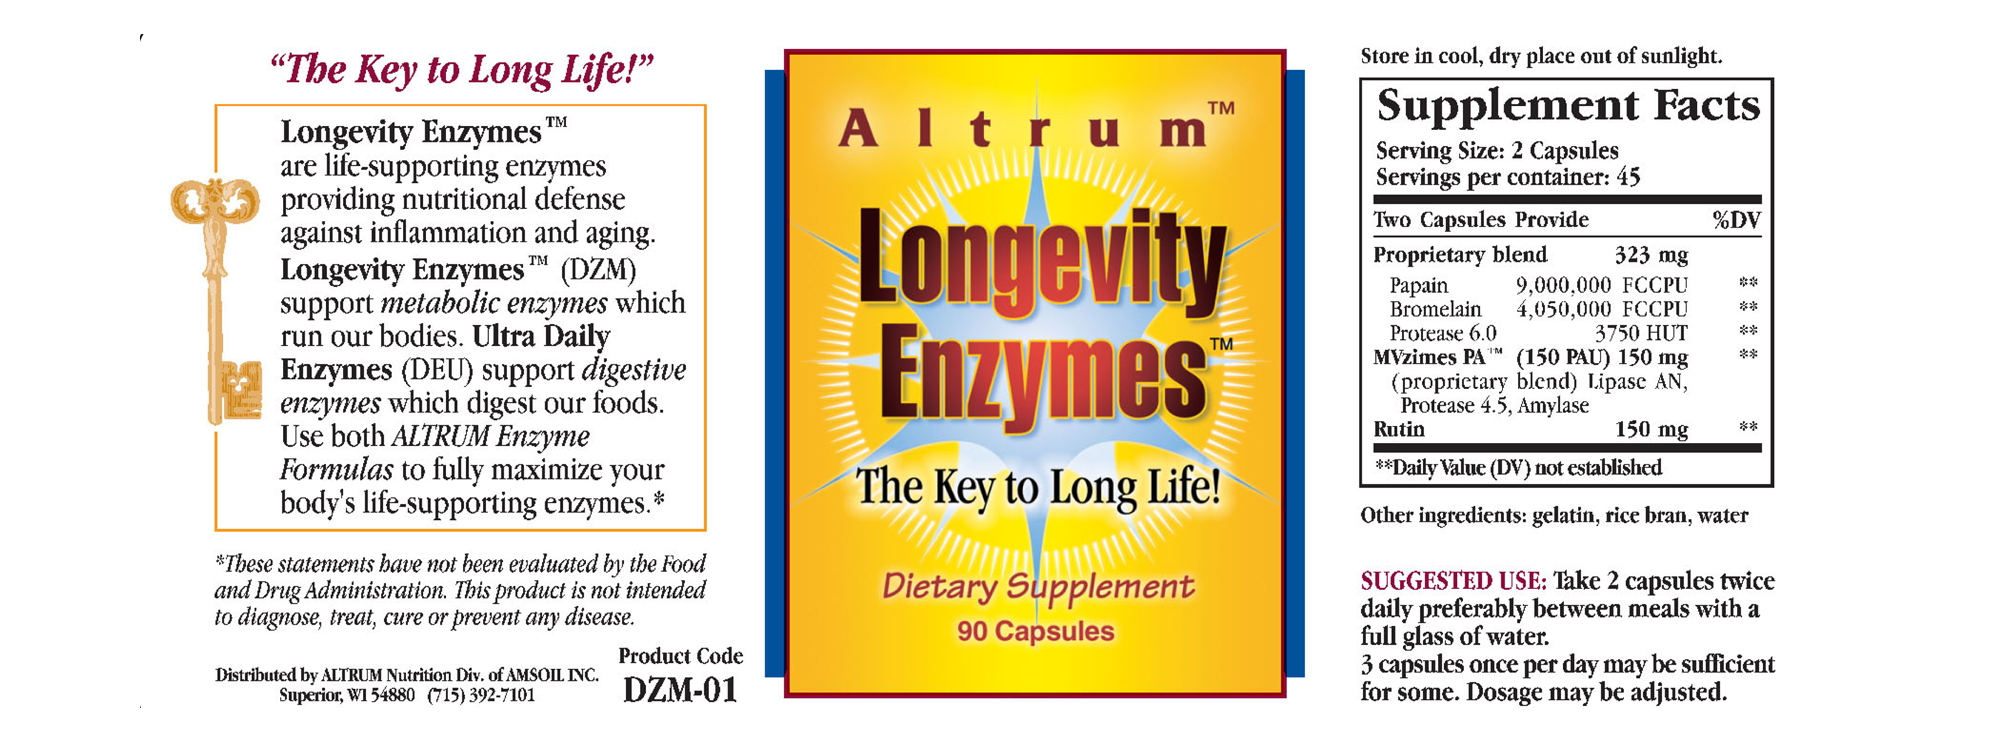 Longevity Enzymes